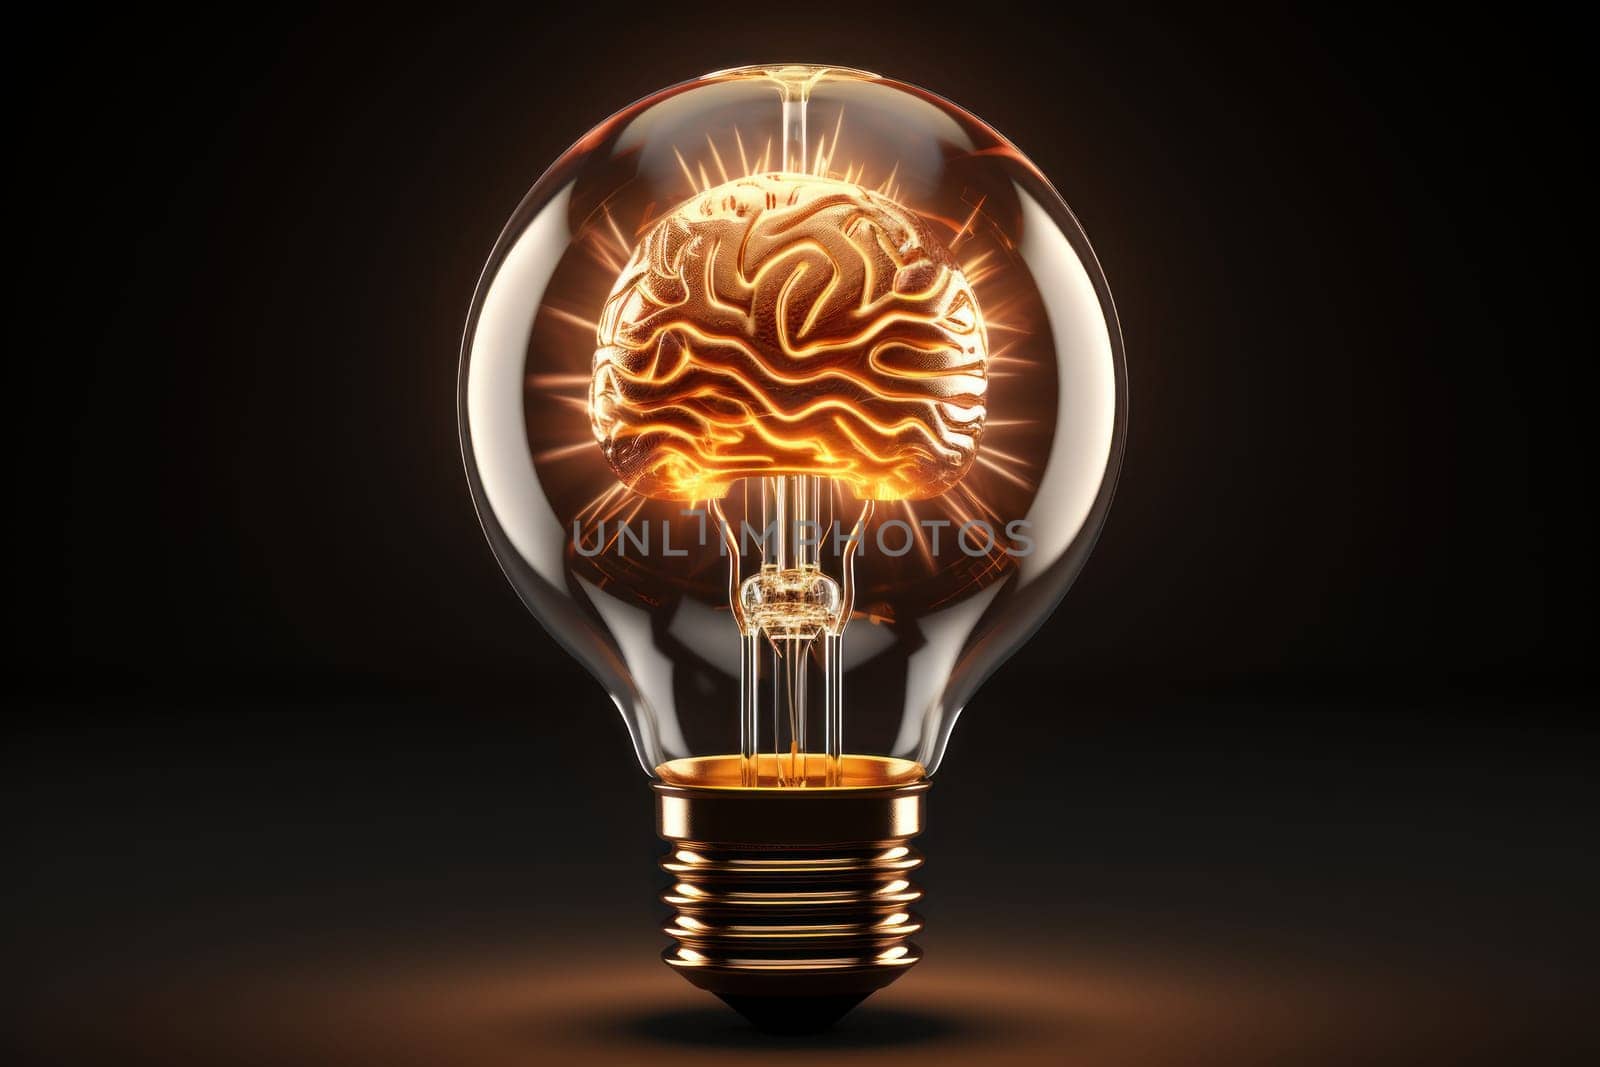 Human brain lightbulb new ideas concept. Generative AI.